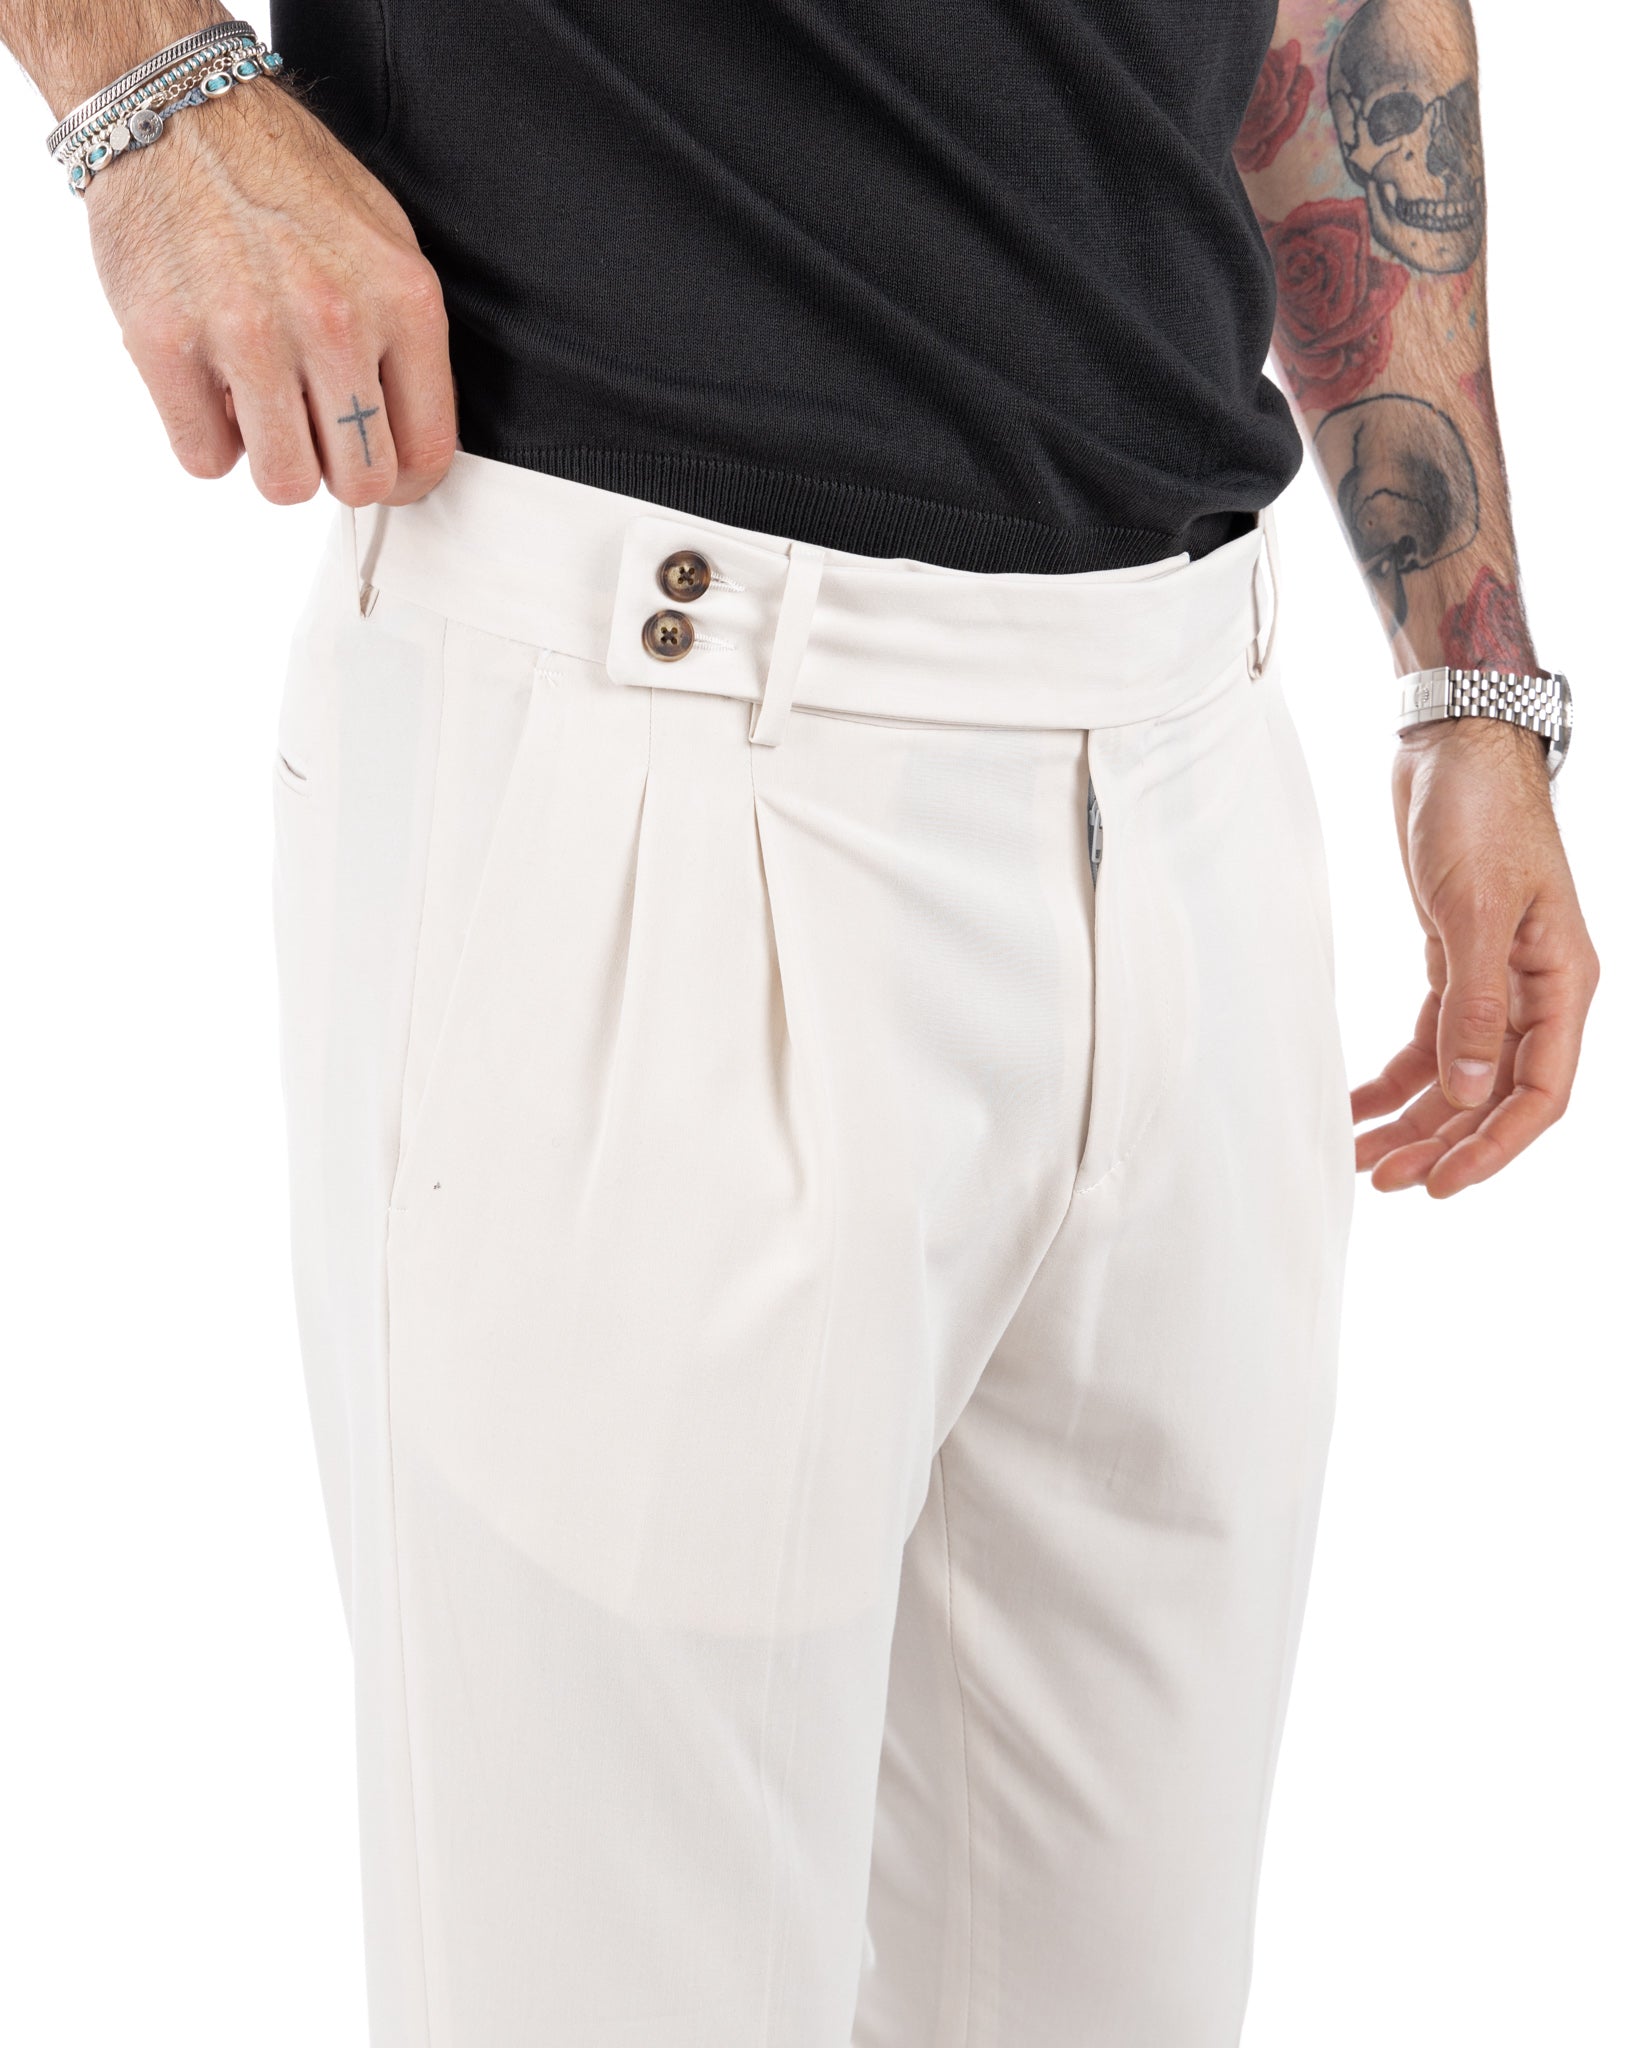 Caprera - cream high waisted trousers